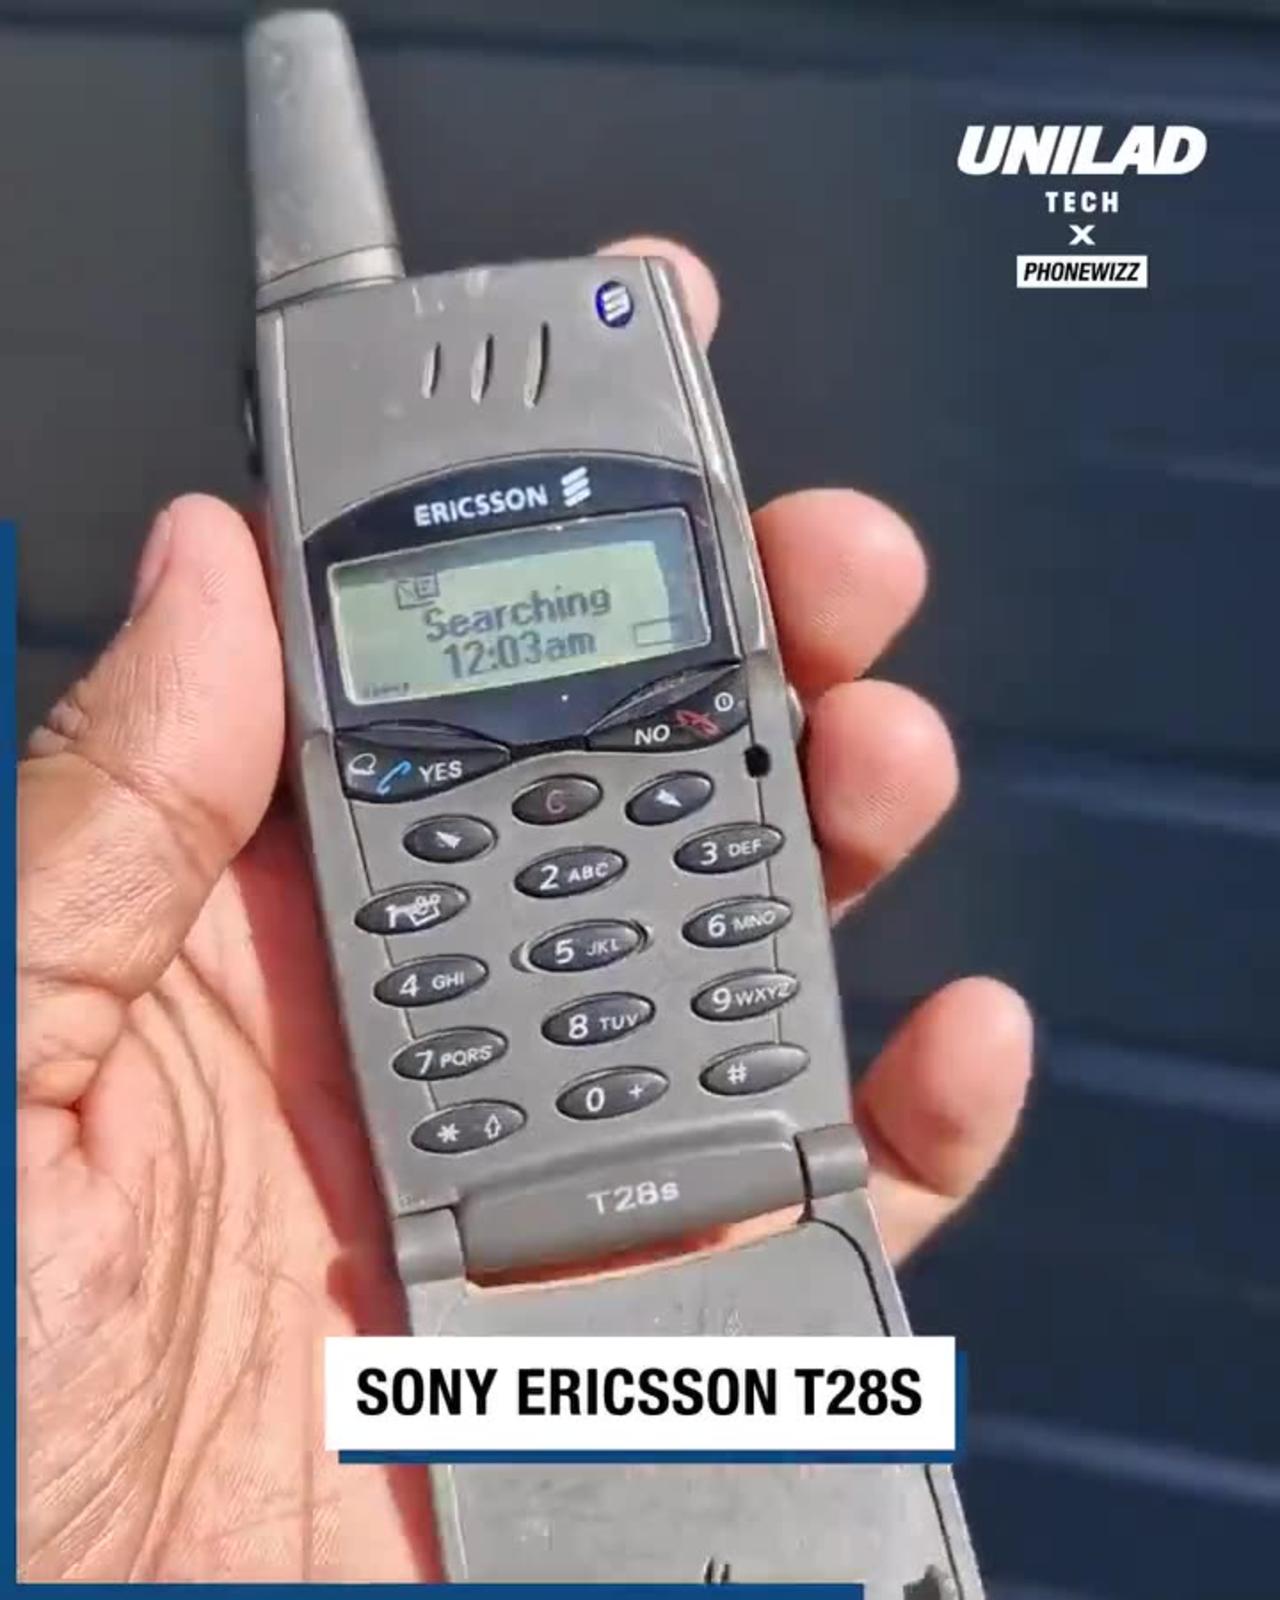 Nokia had the phones market on lock